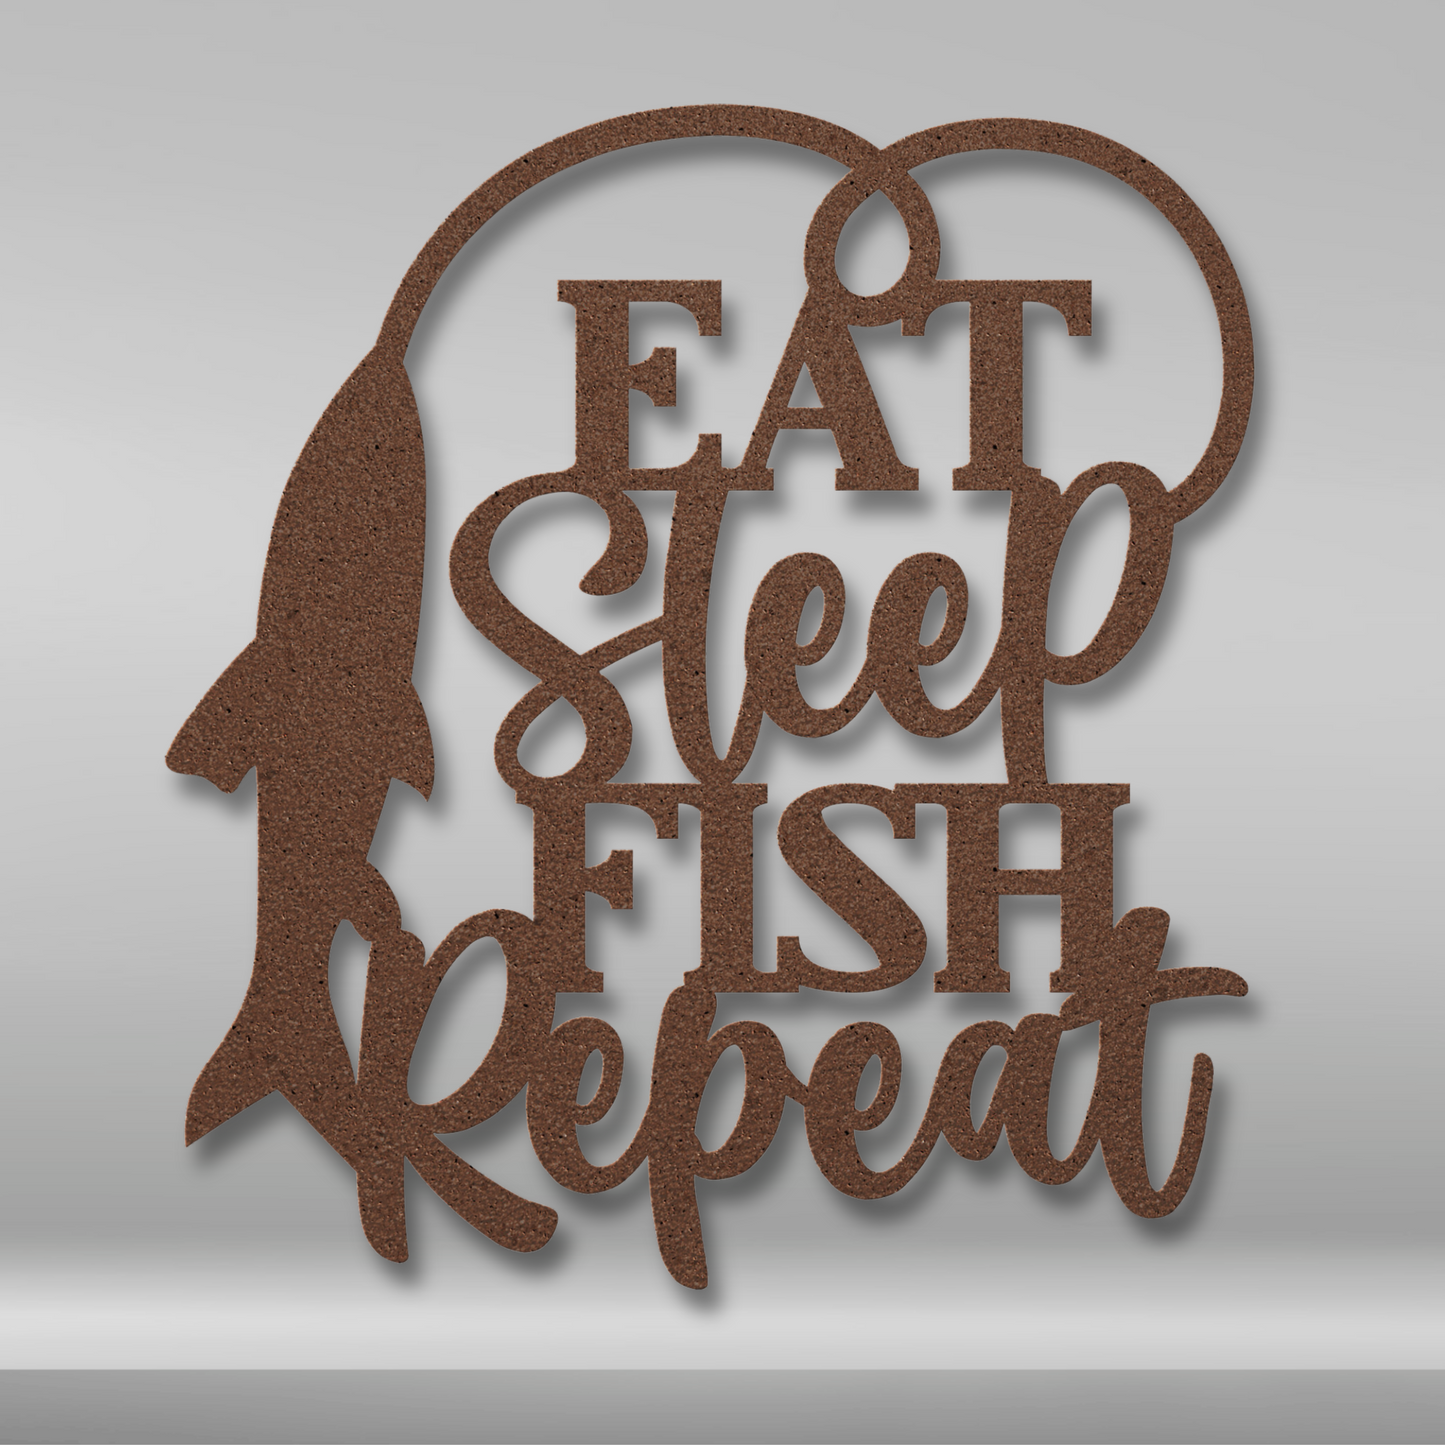 Eat Sleep Fish Repeat Metal Sign